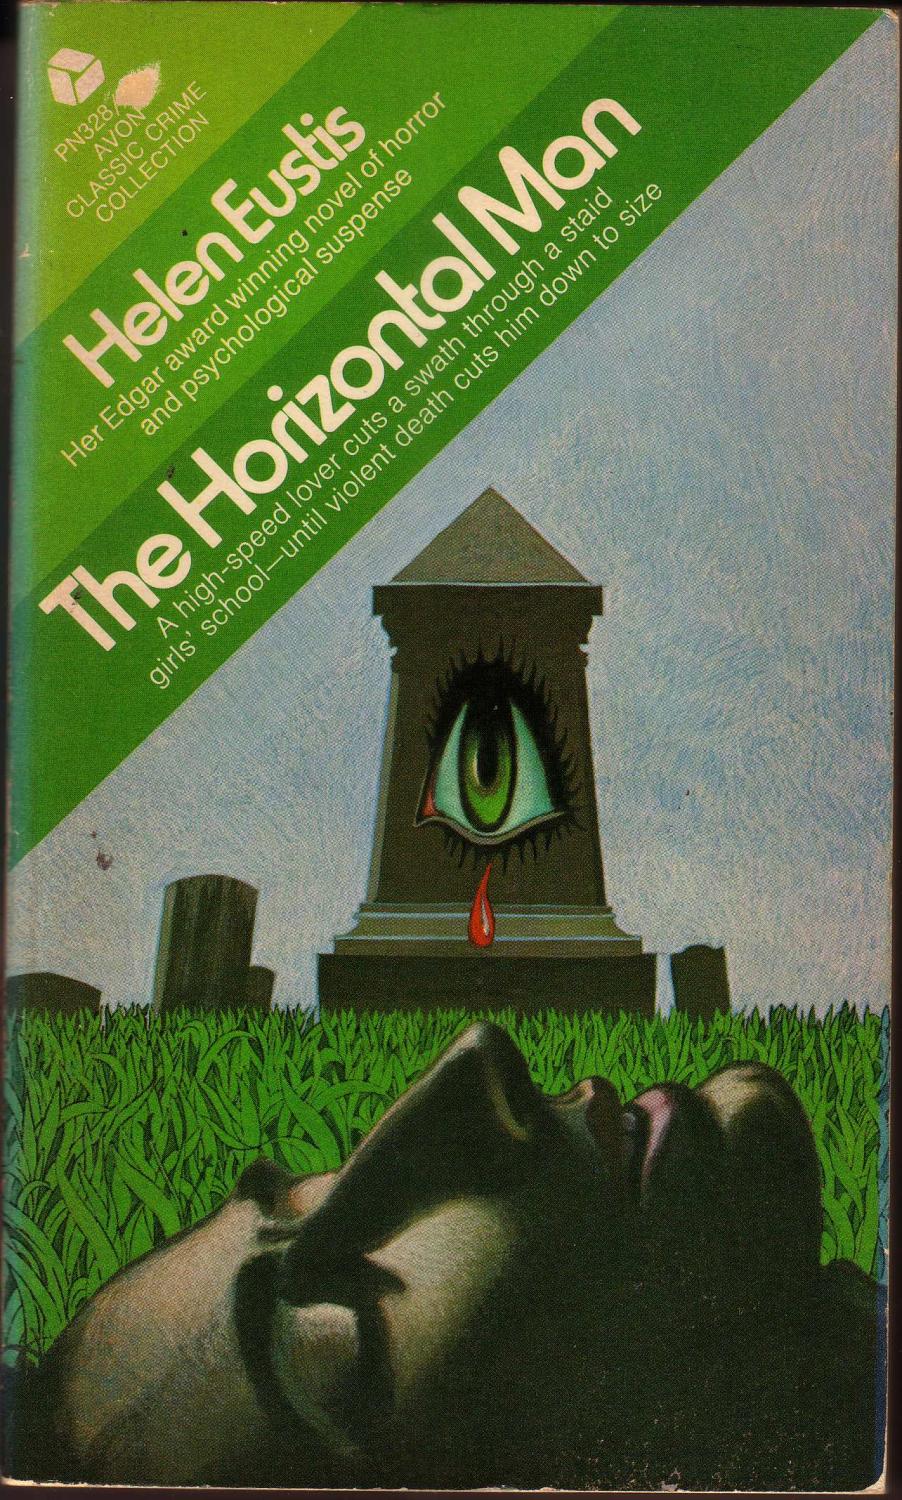 Avon edition of The Horizontal Man